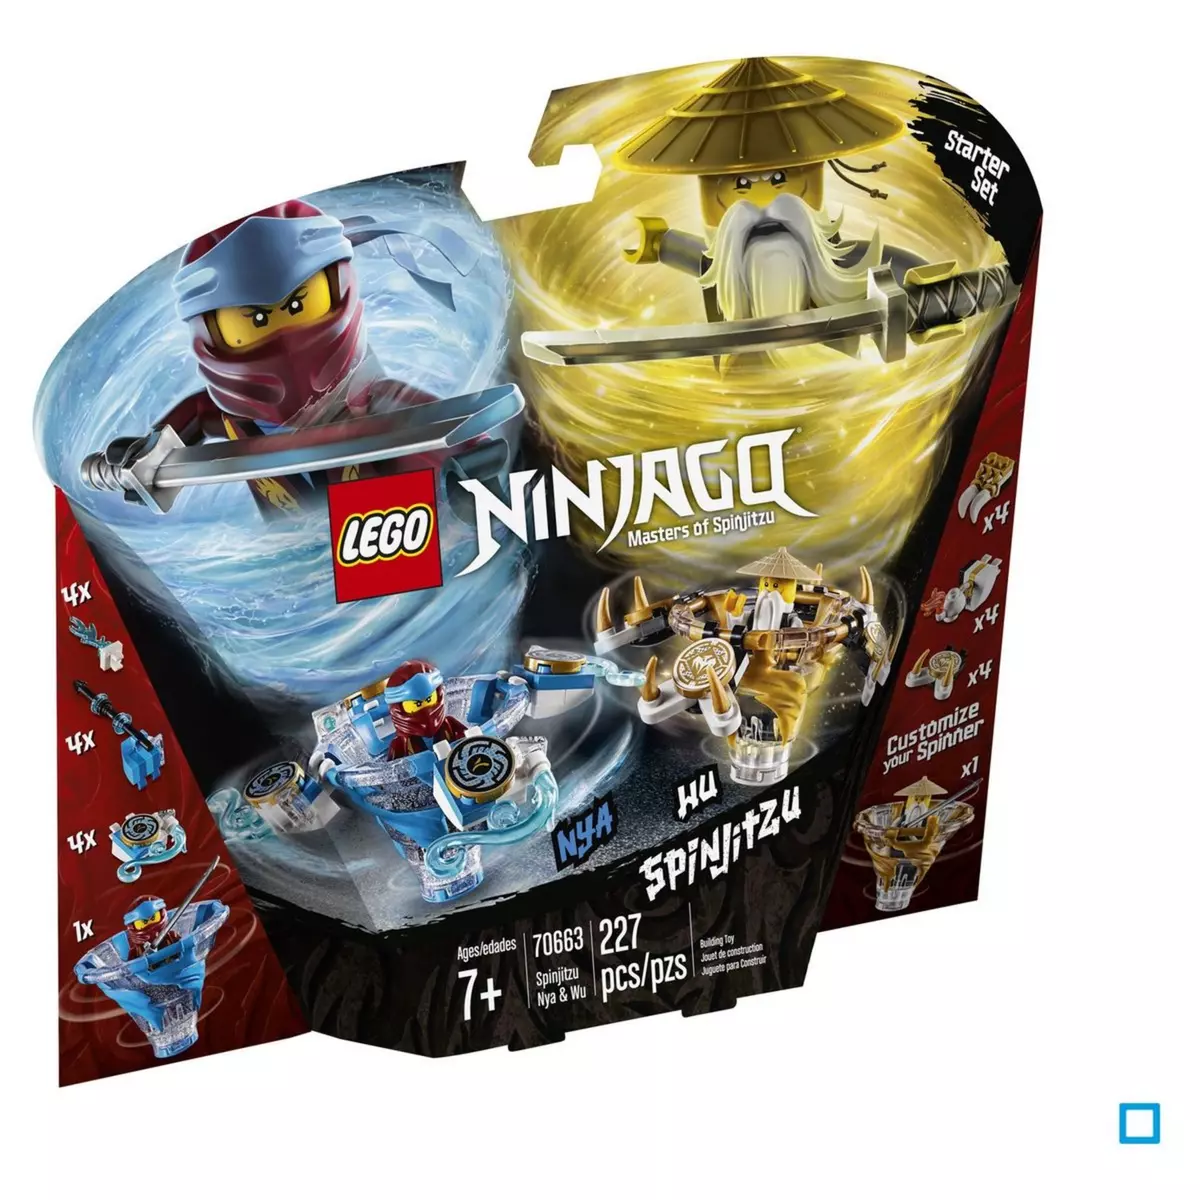 LEGO Ninjago 70663 - Toupies Spinjitzu Nya & Wu